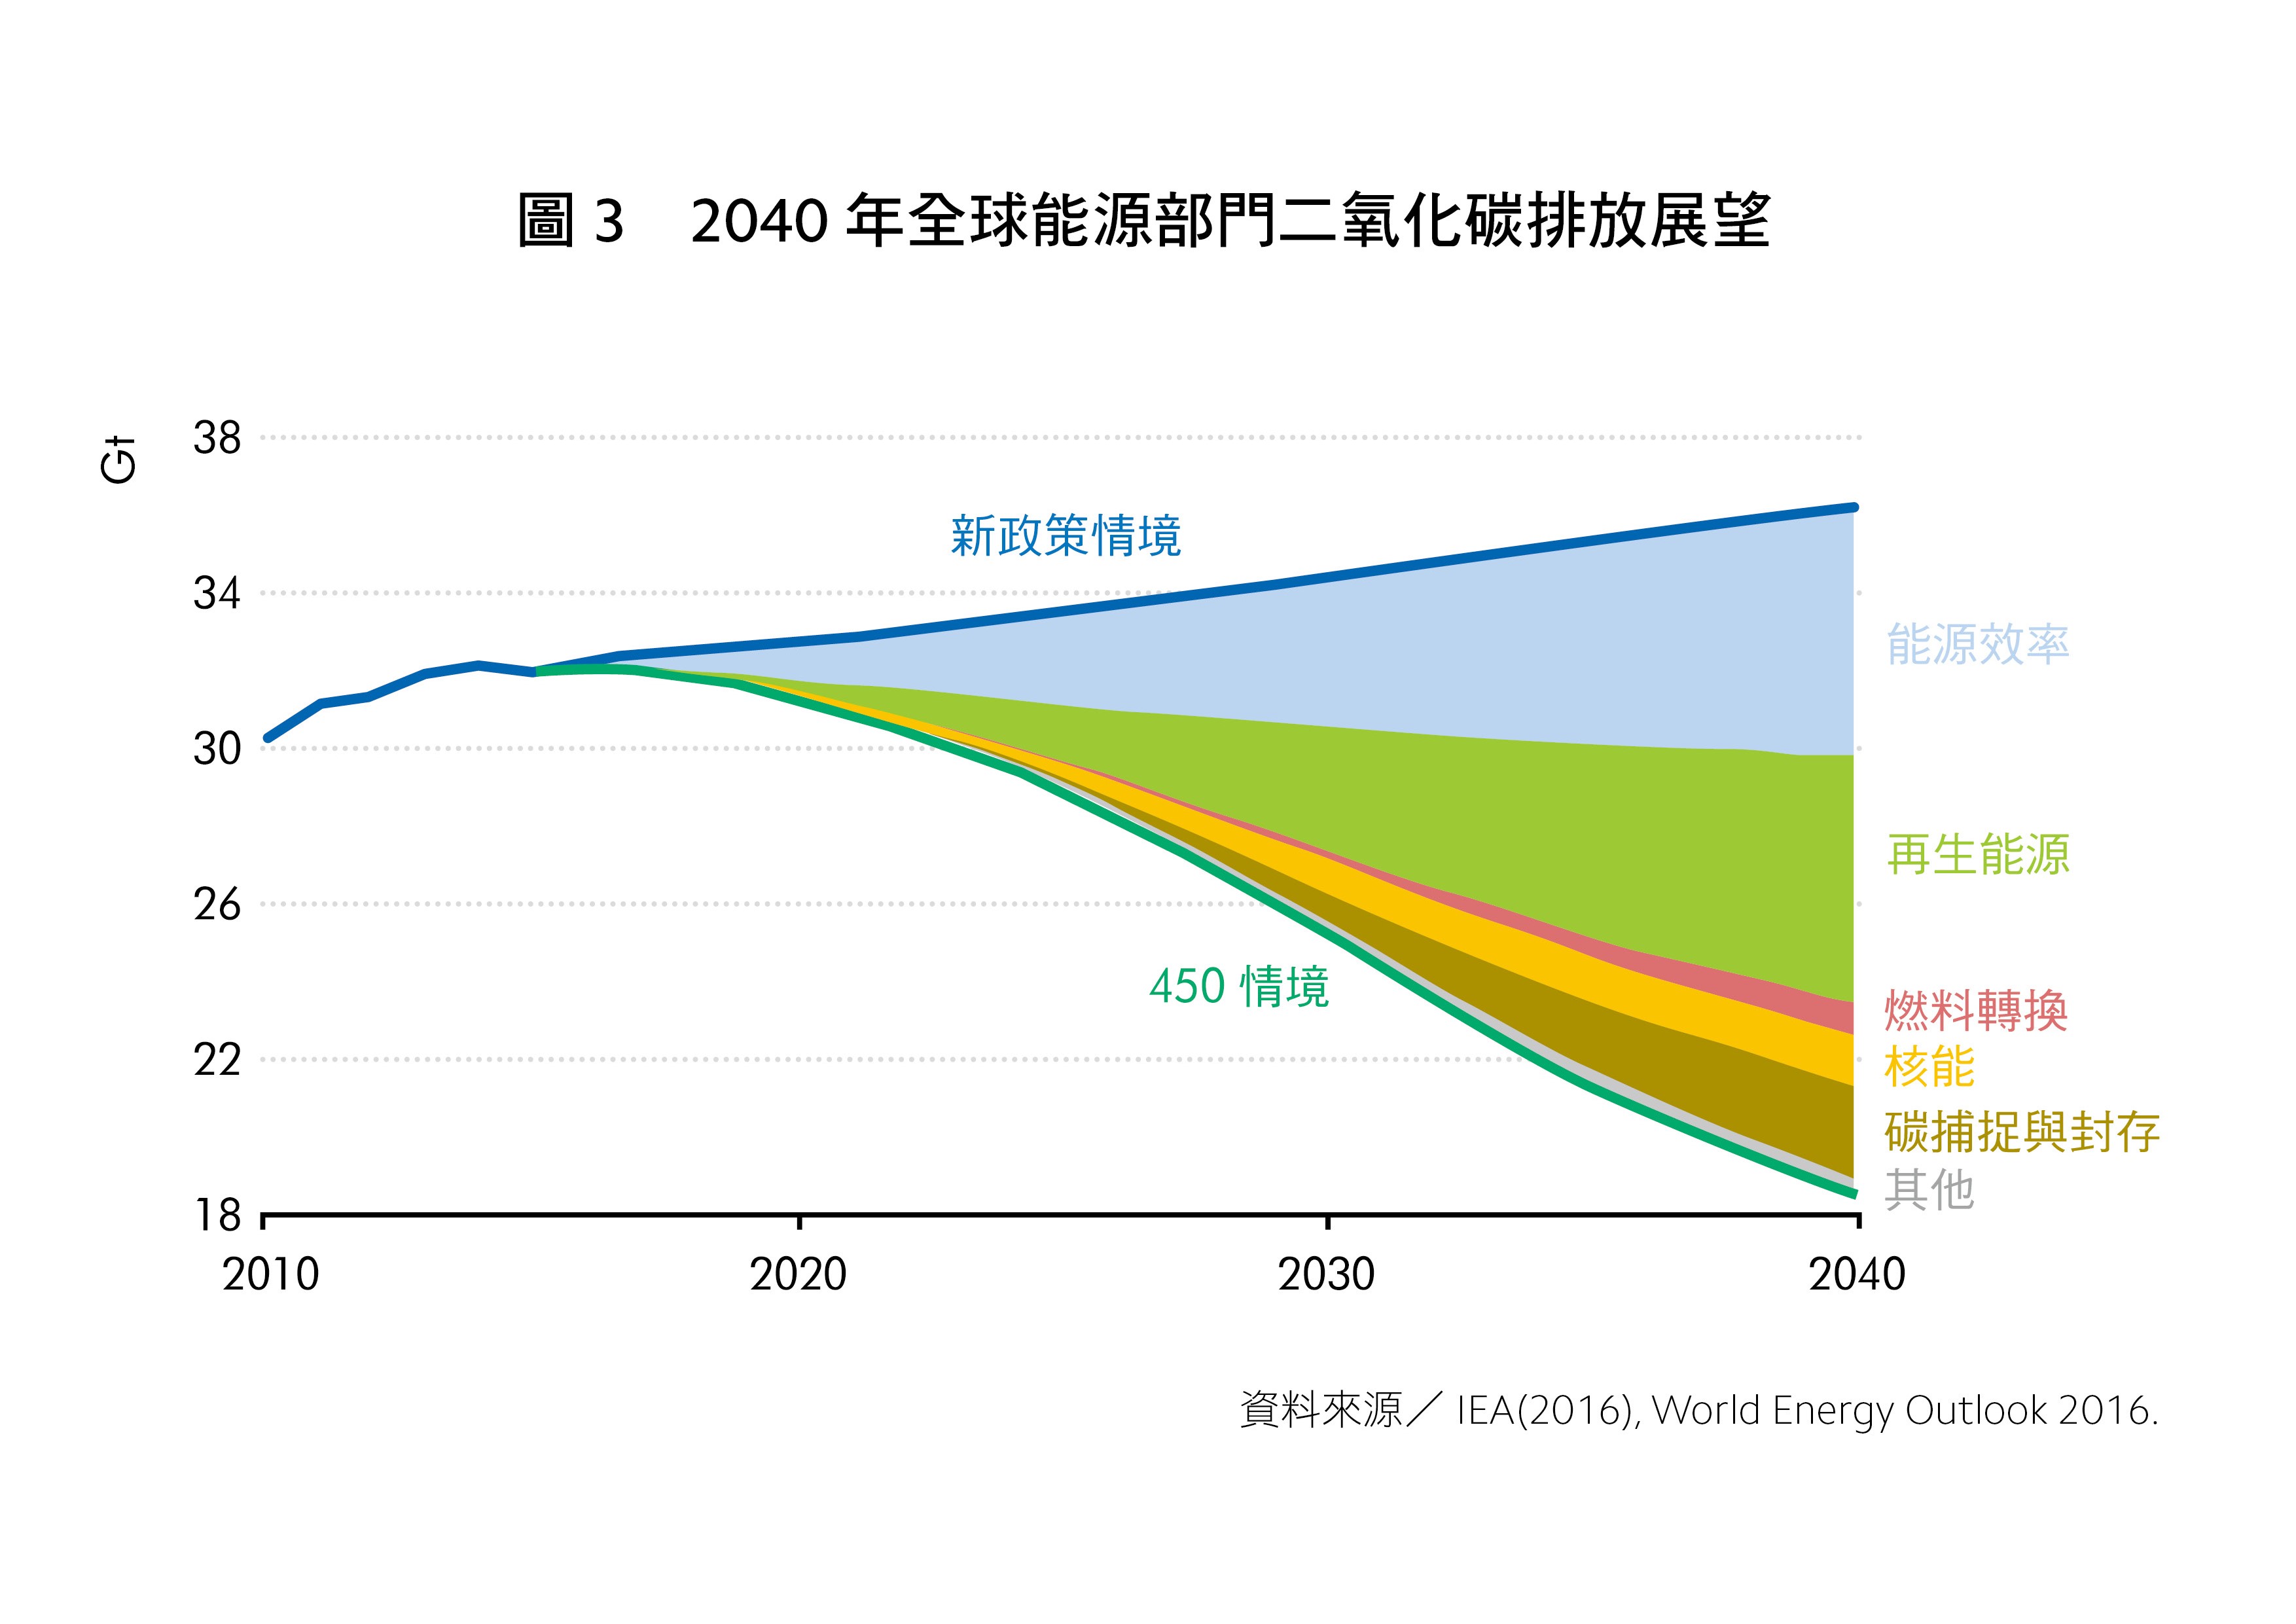 資料來源：IEA(2016), World Energy Outlook 2016.